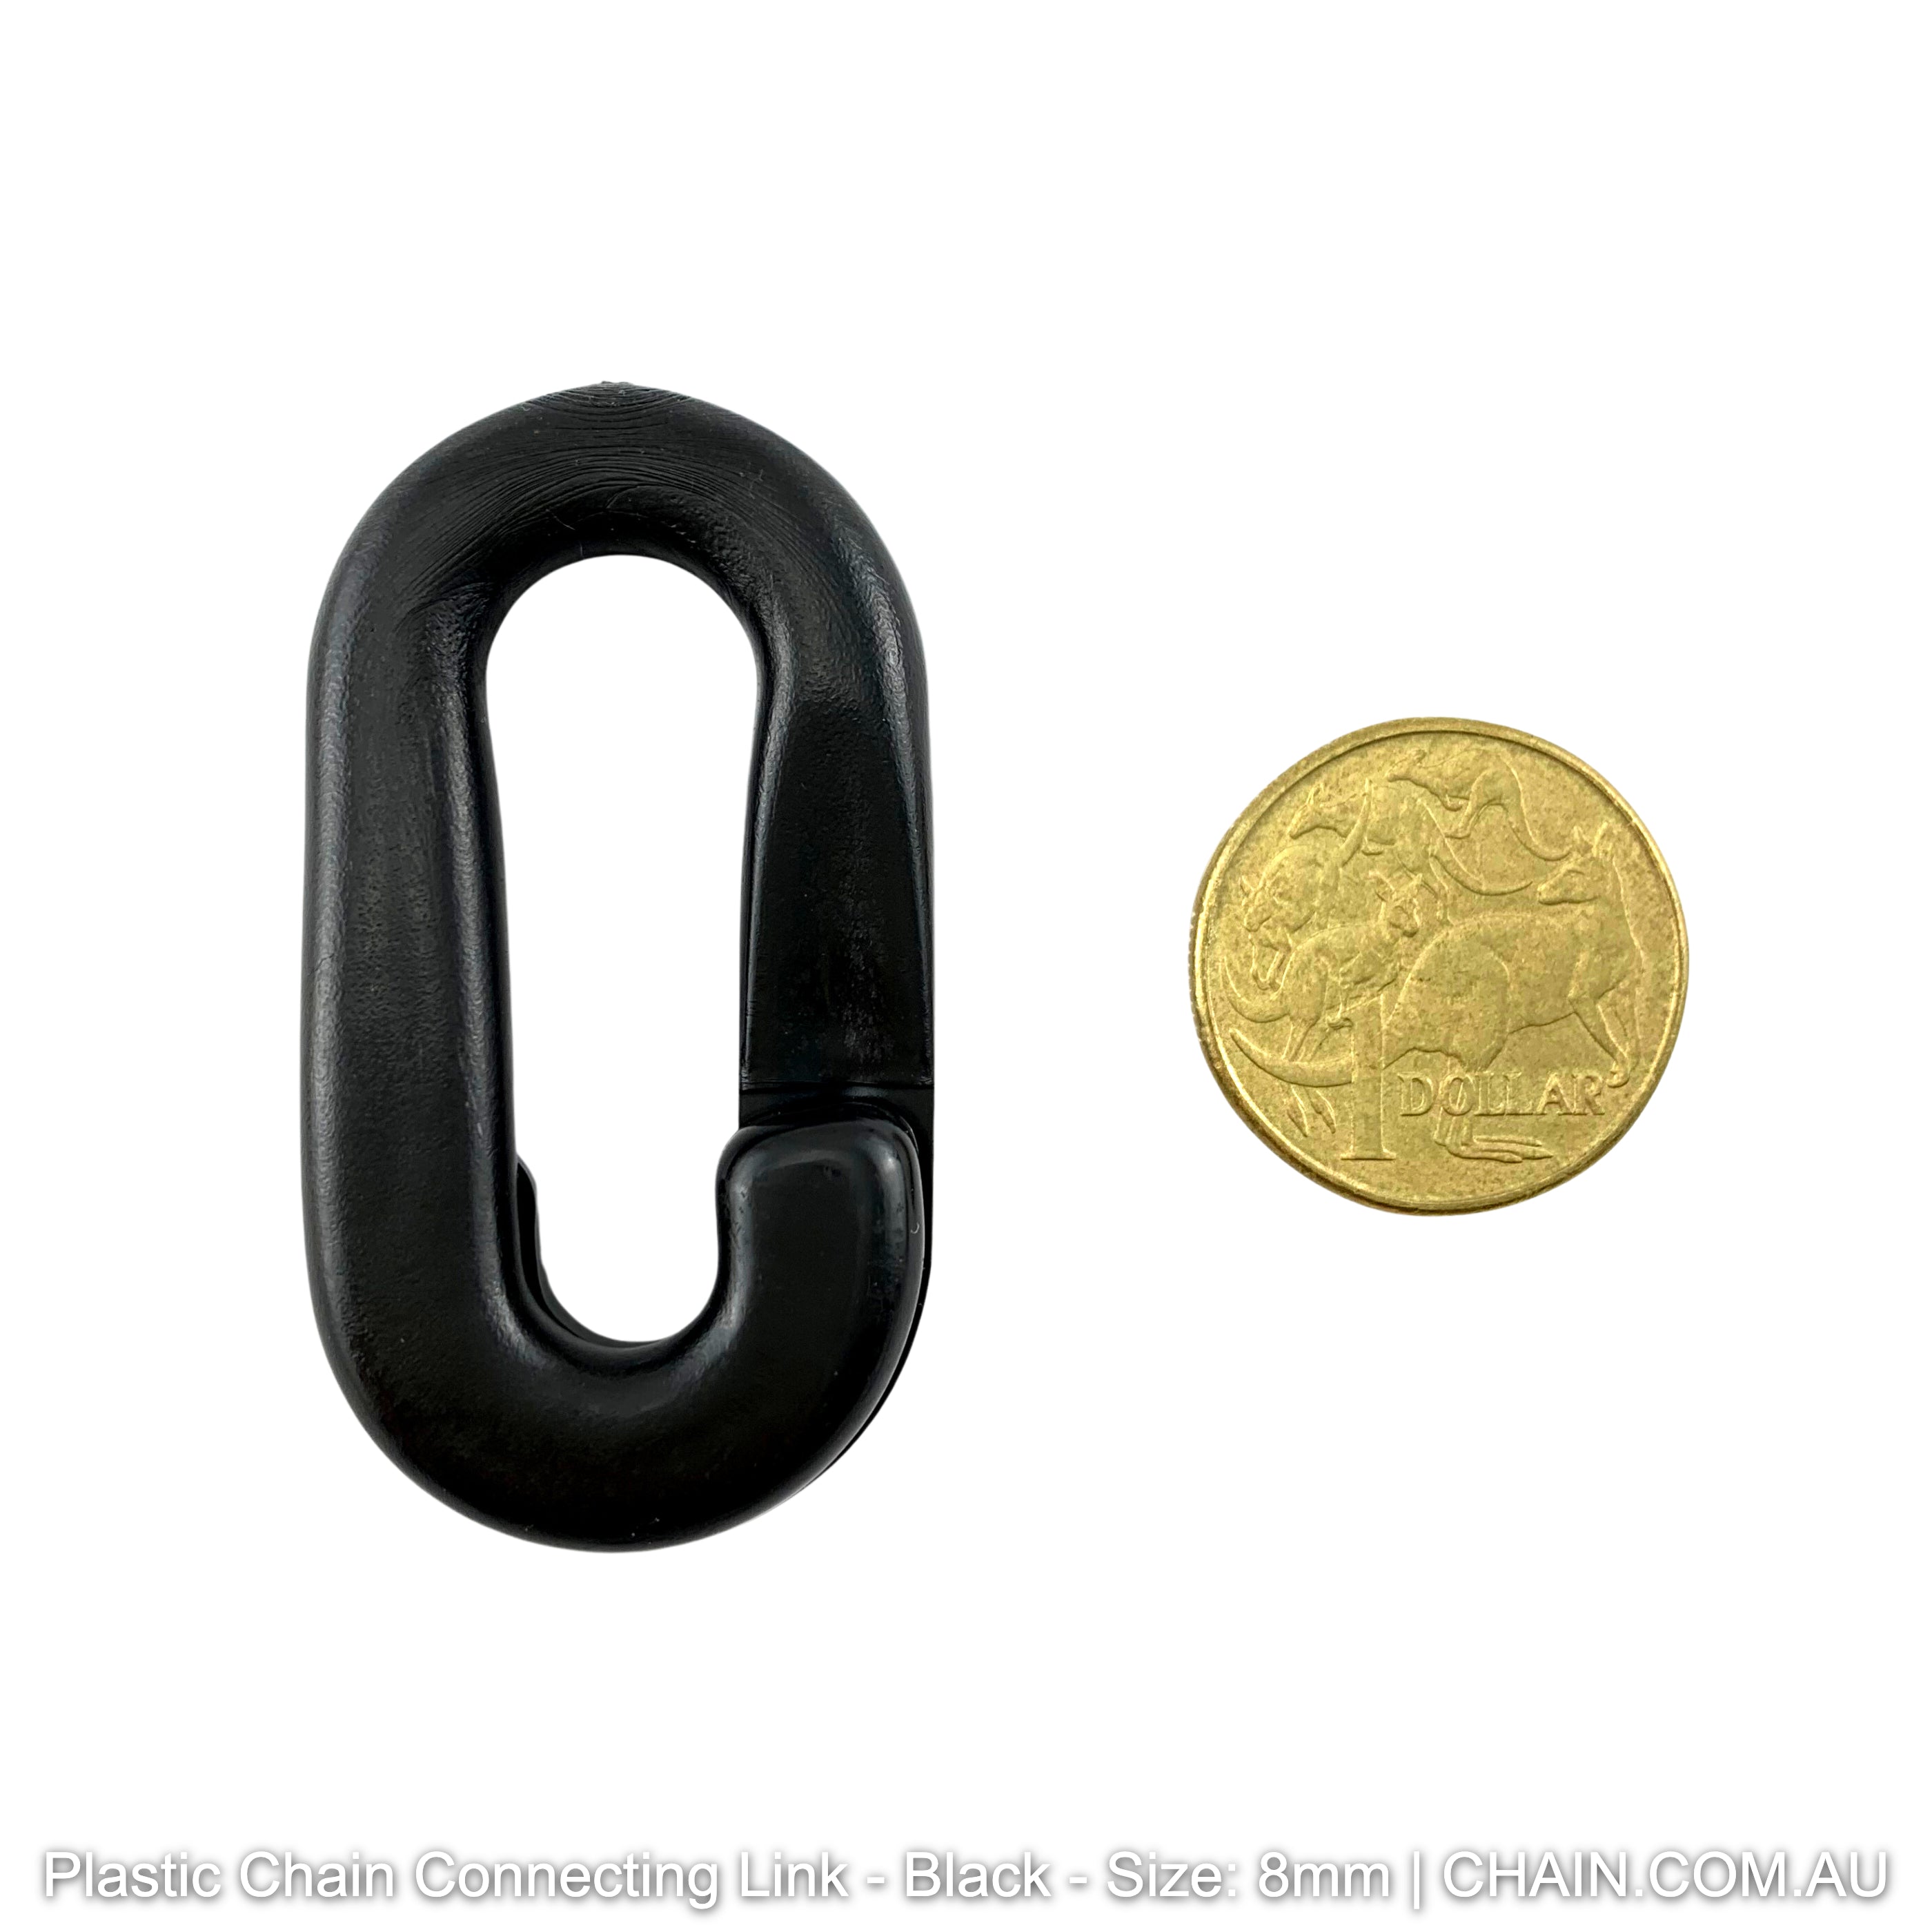 Black plastic chain connecting link, size 8mm. Australia wide shipping. Shop: chain.com.au